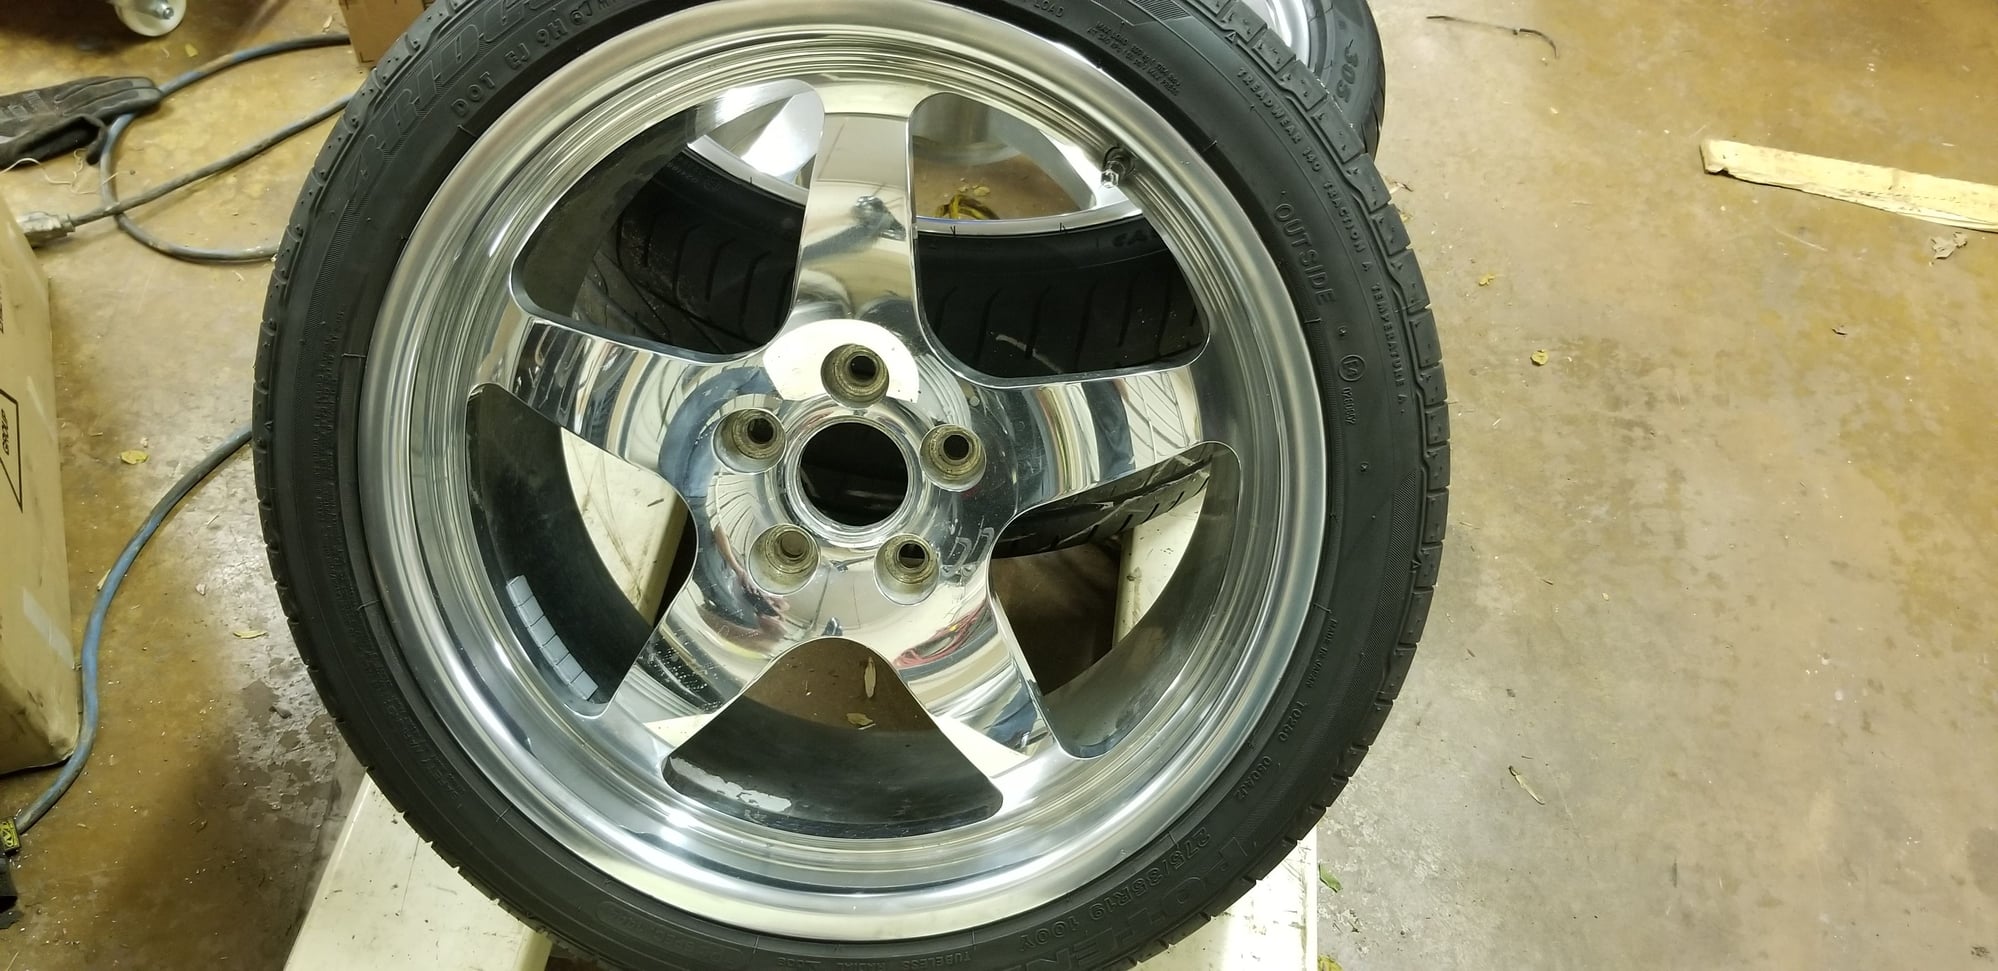  - CCW SP550 wheels. 19x10 20x12 - Lynchburg, VA 24501, United States